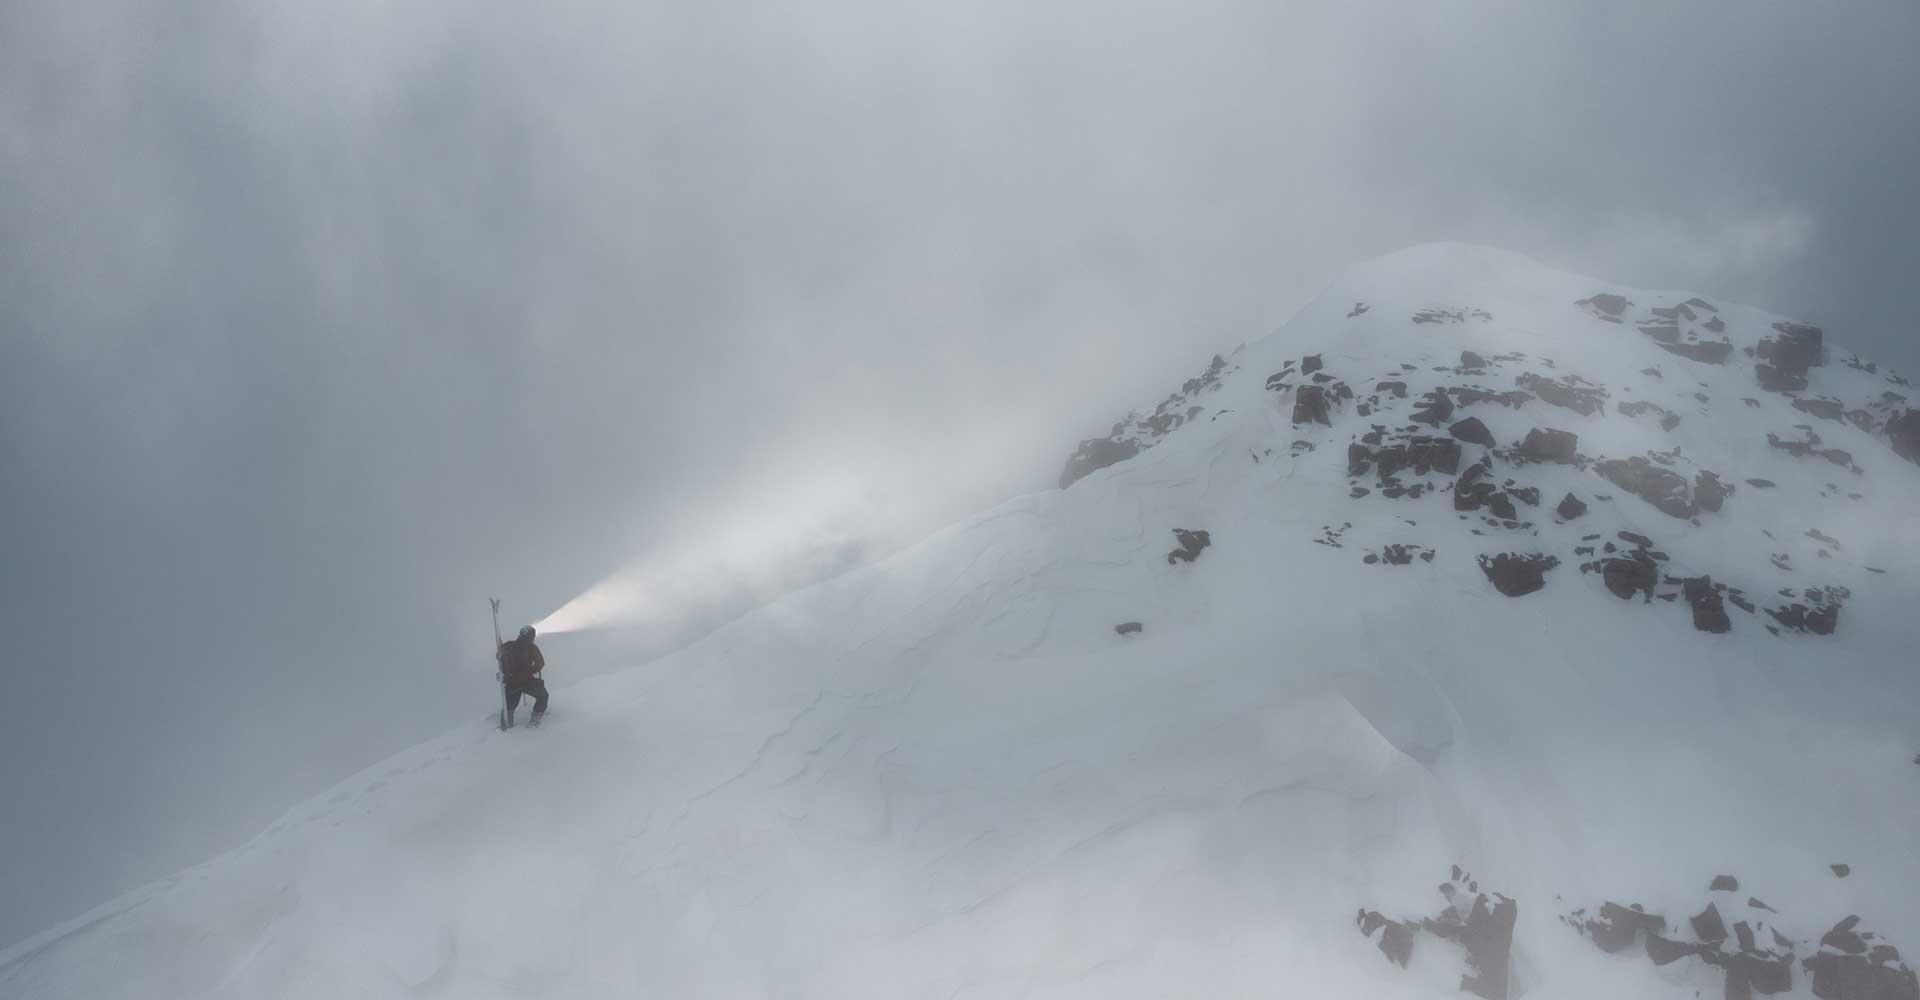 Michael Wirth climbing a 13,000+ foot mountain in the Elk Range. ©Luke Tornare